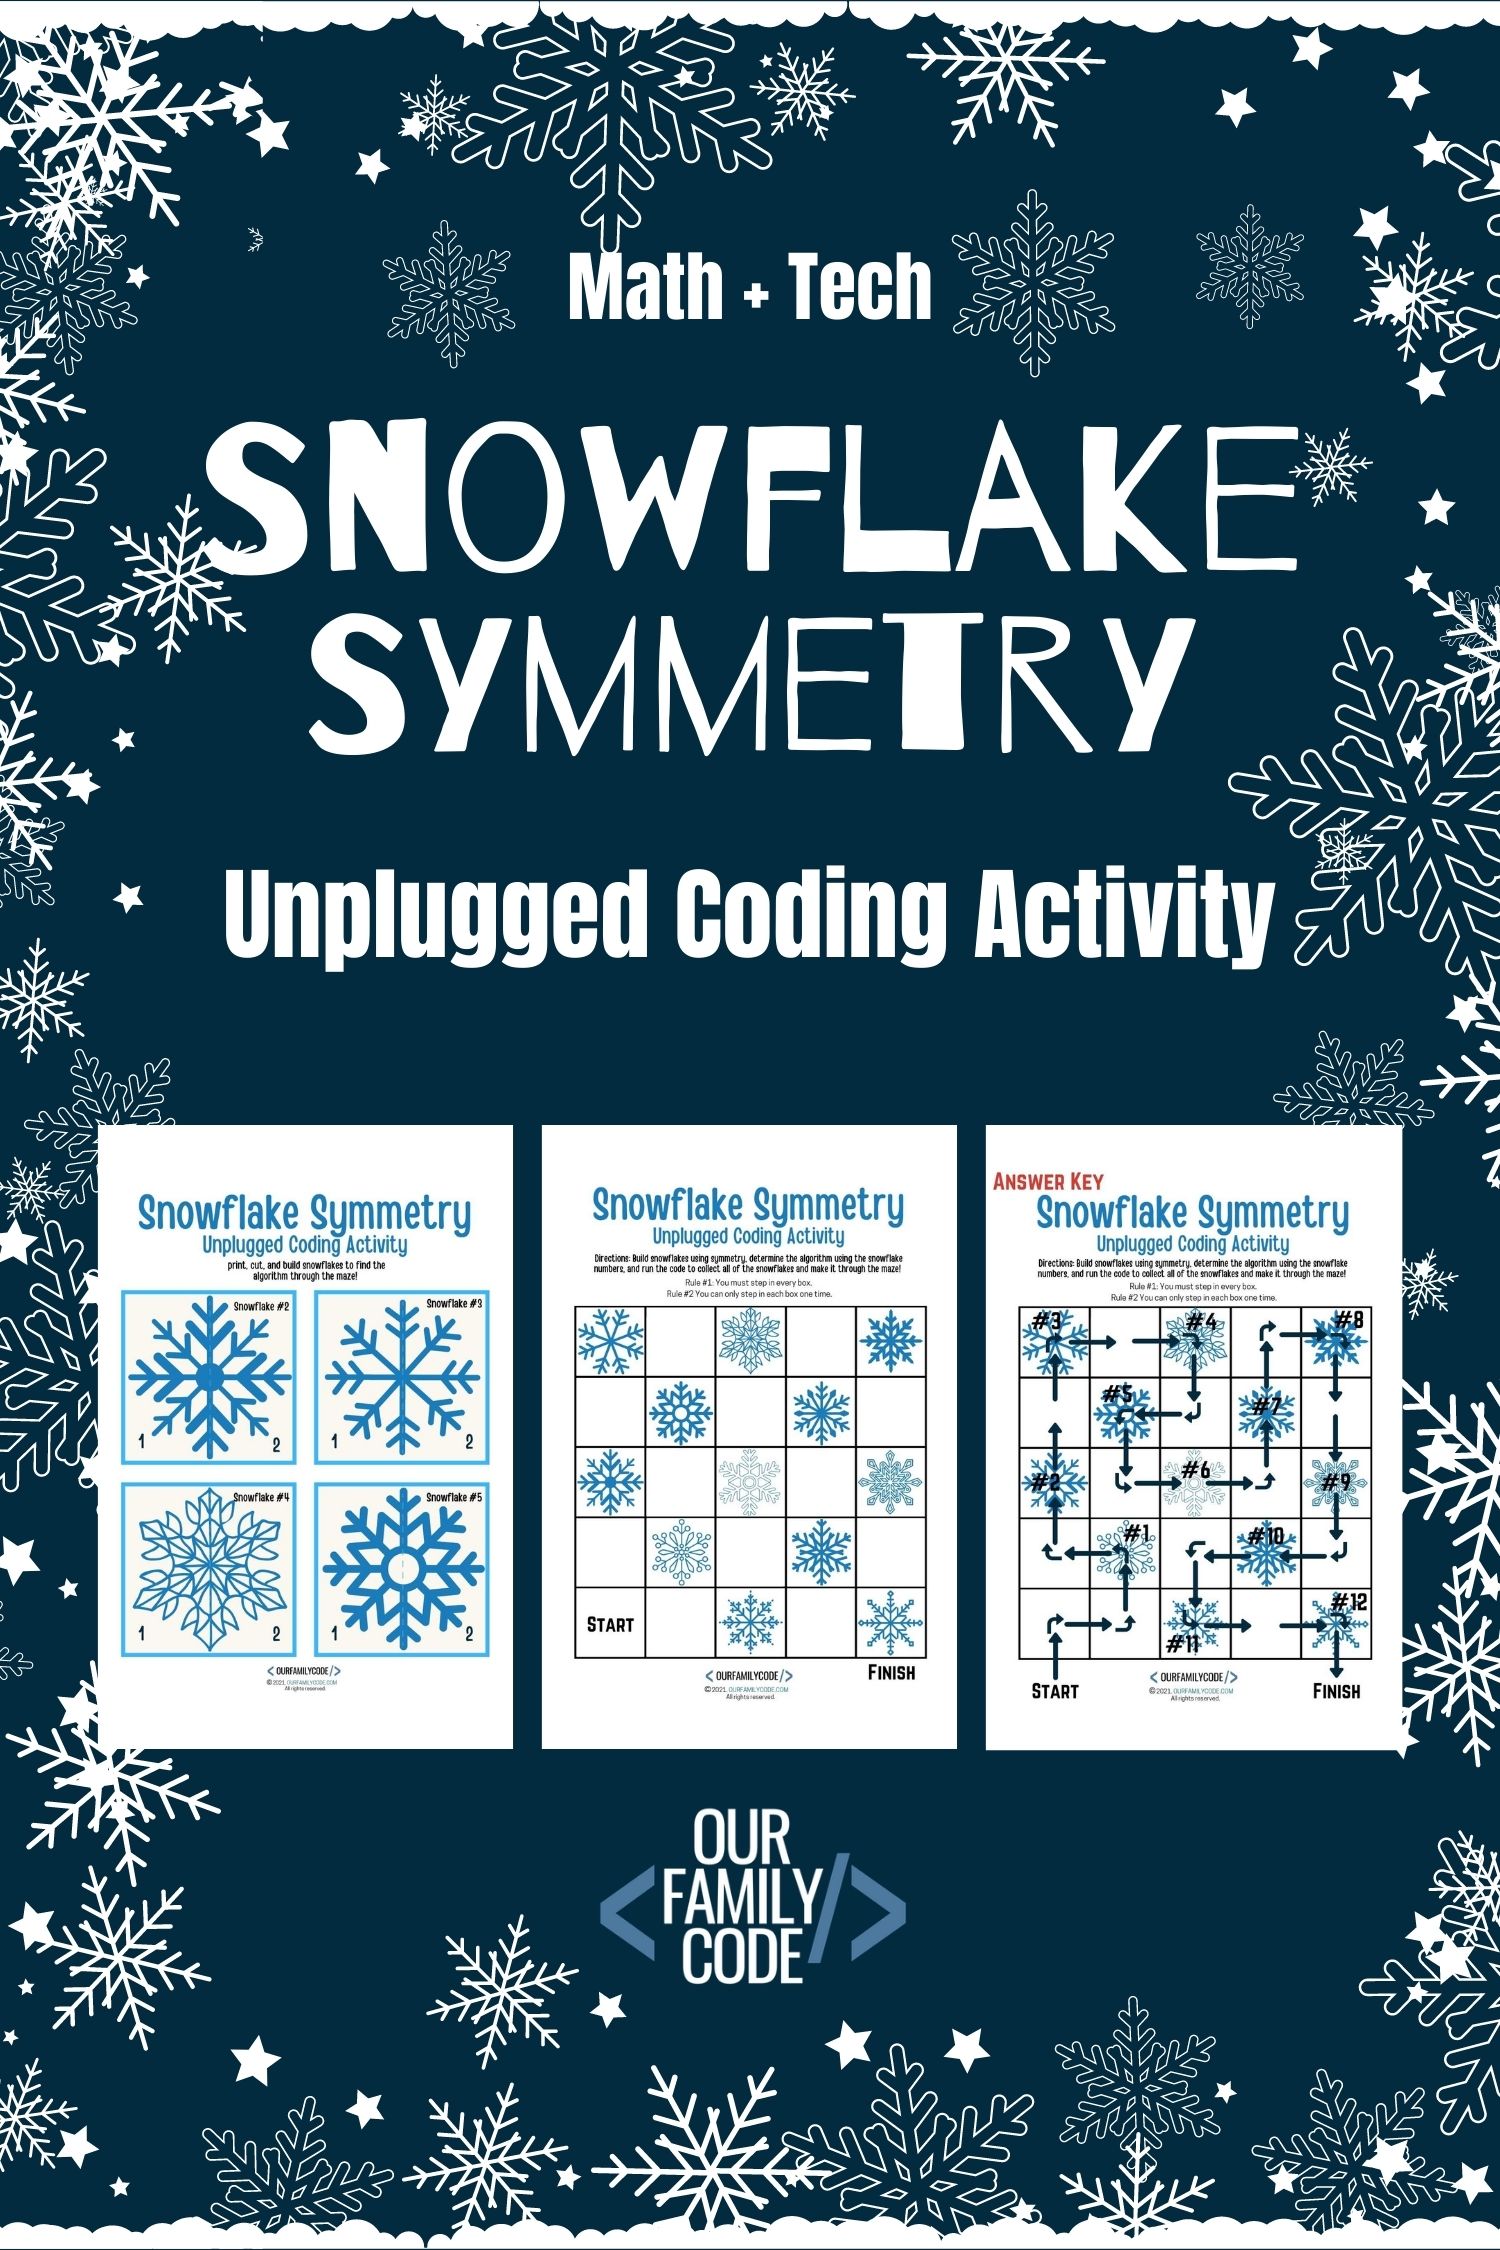 snowflake symmetry unplugged coding activity math tech steam kids
